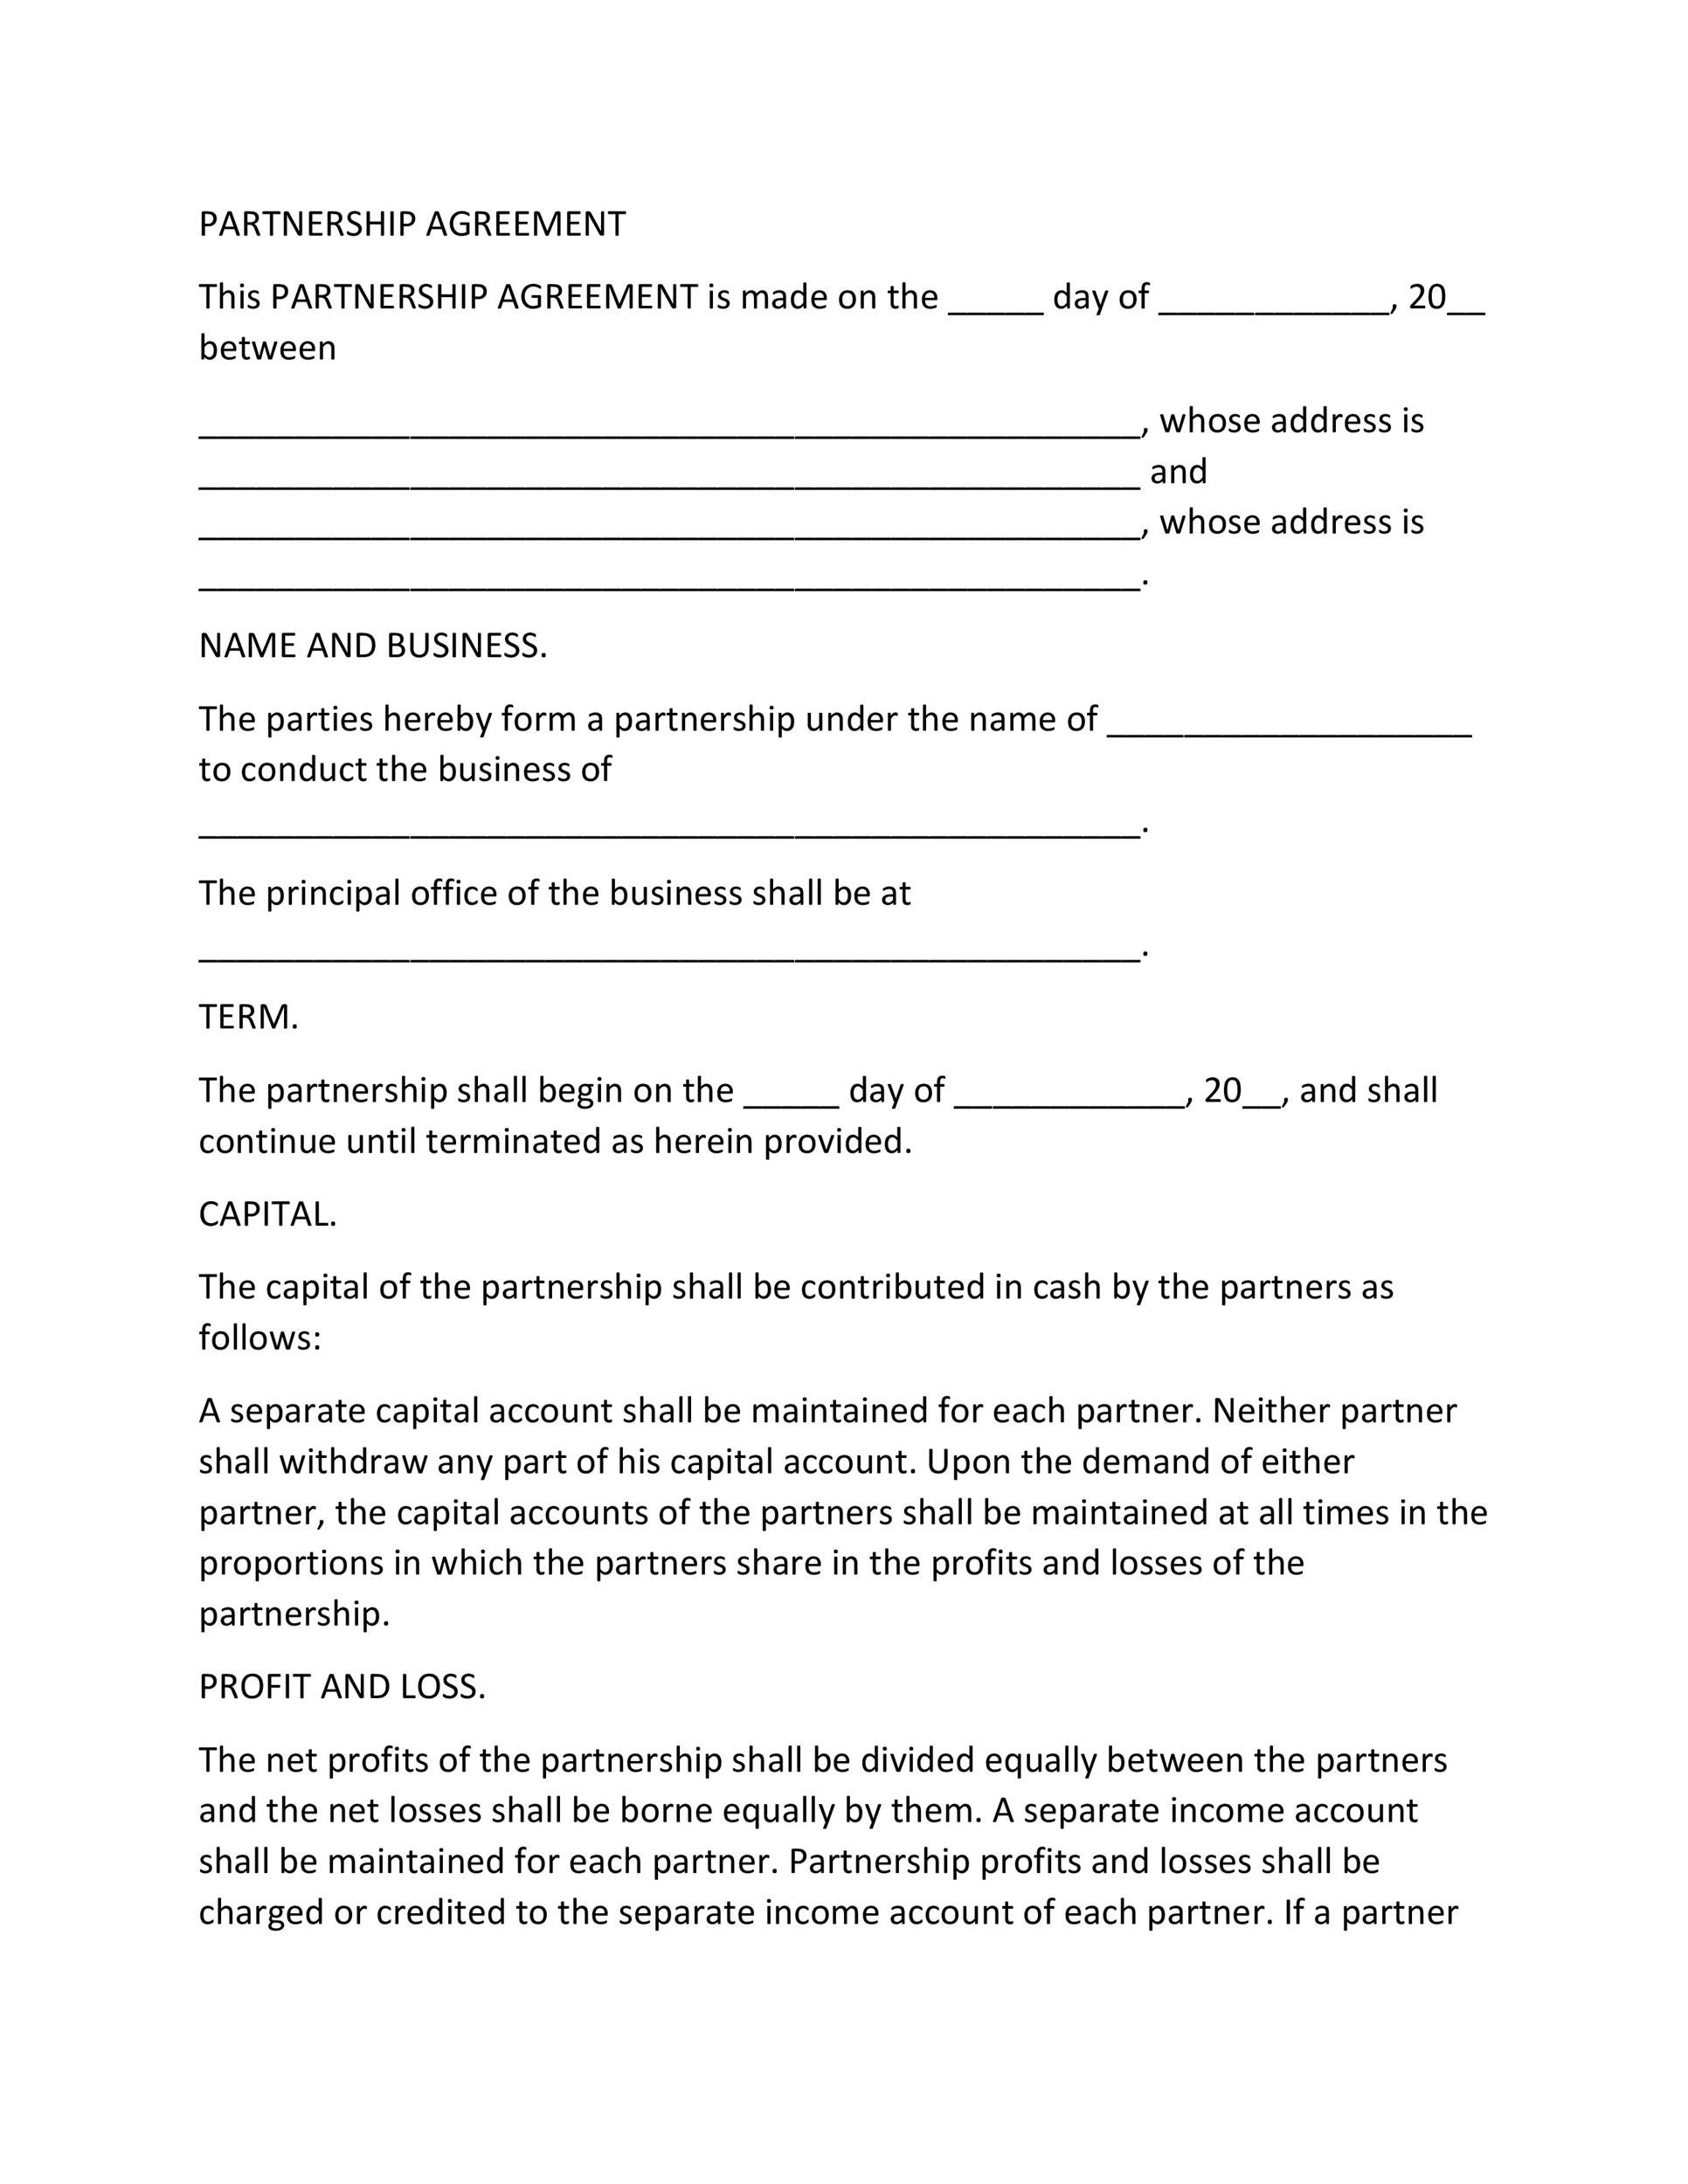 Relationship agreement sample